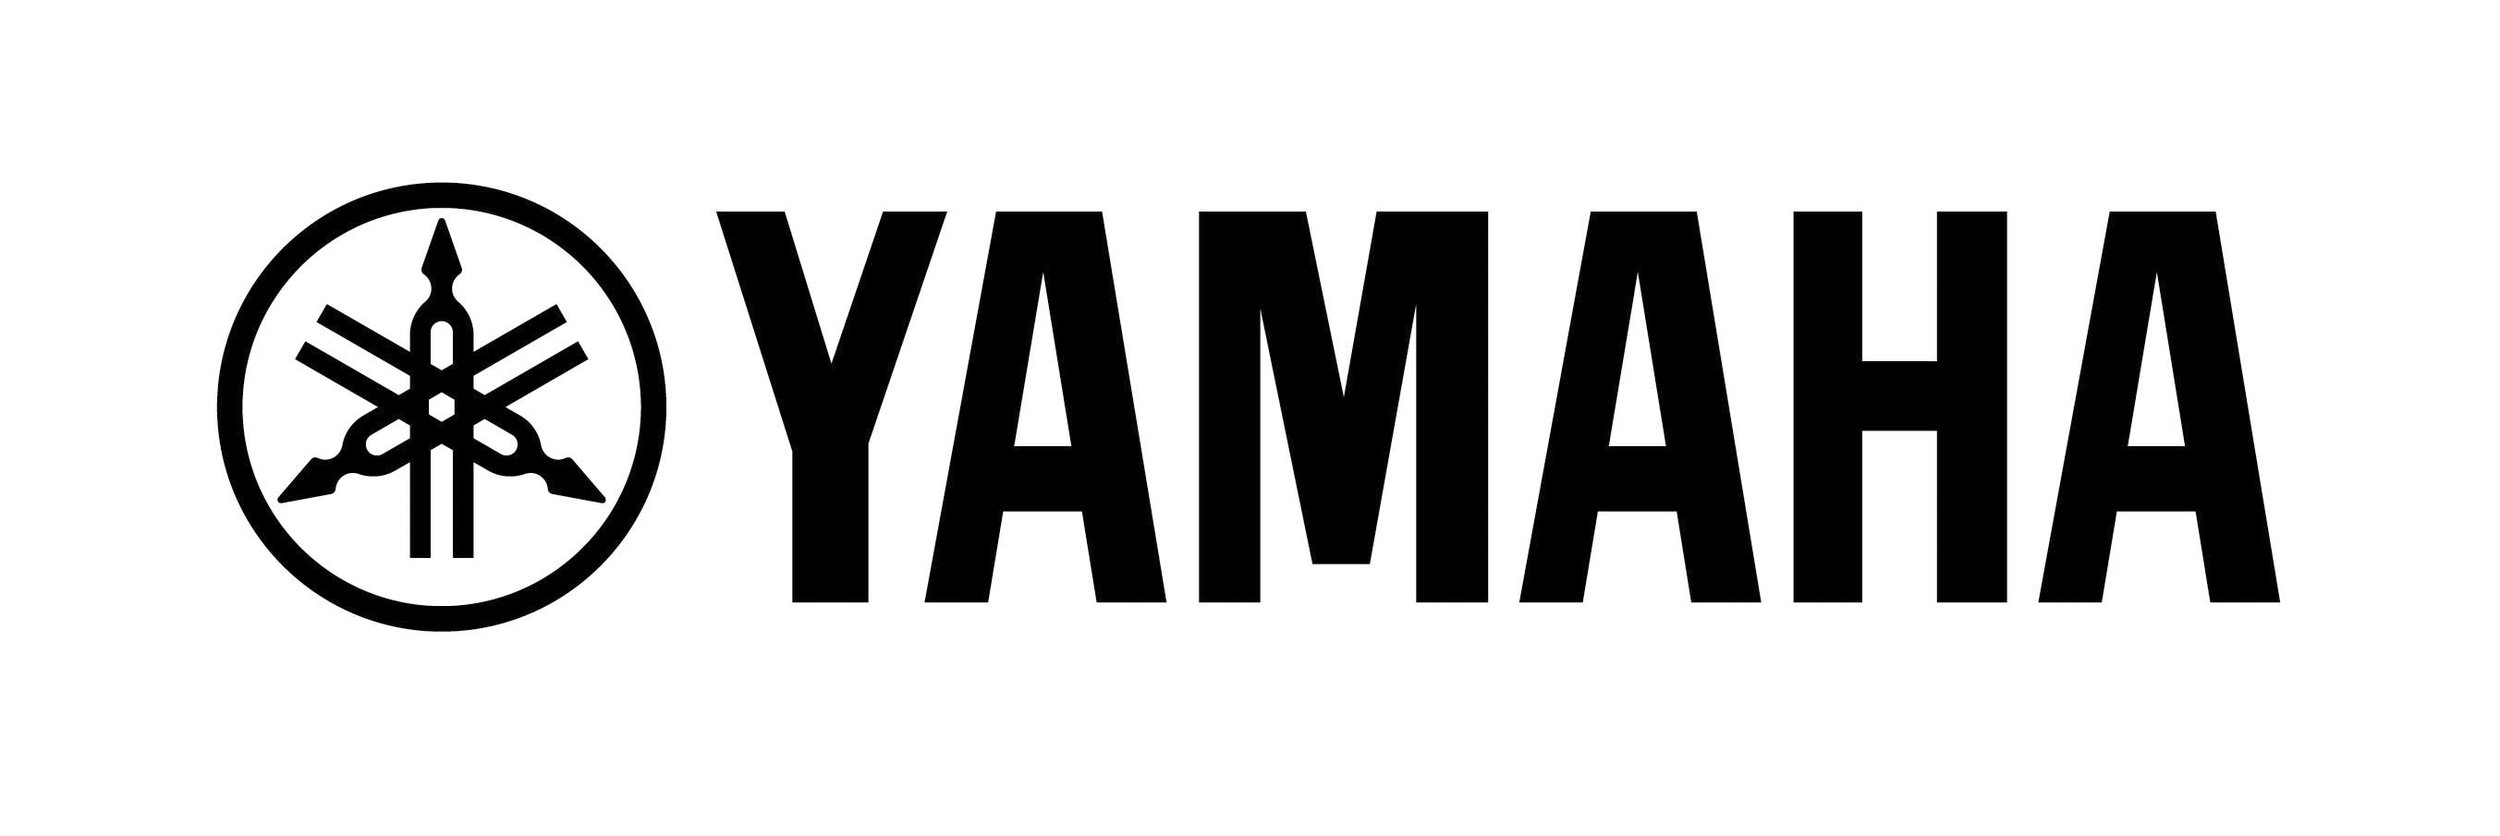 YAMAHA logomark 2017 Black.jpg